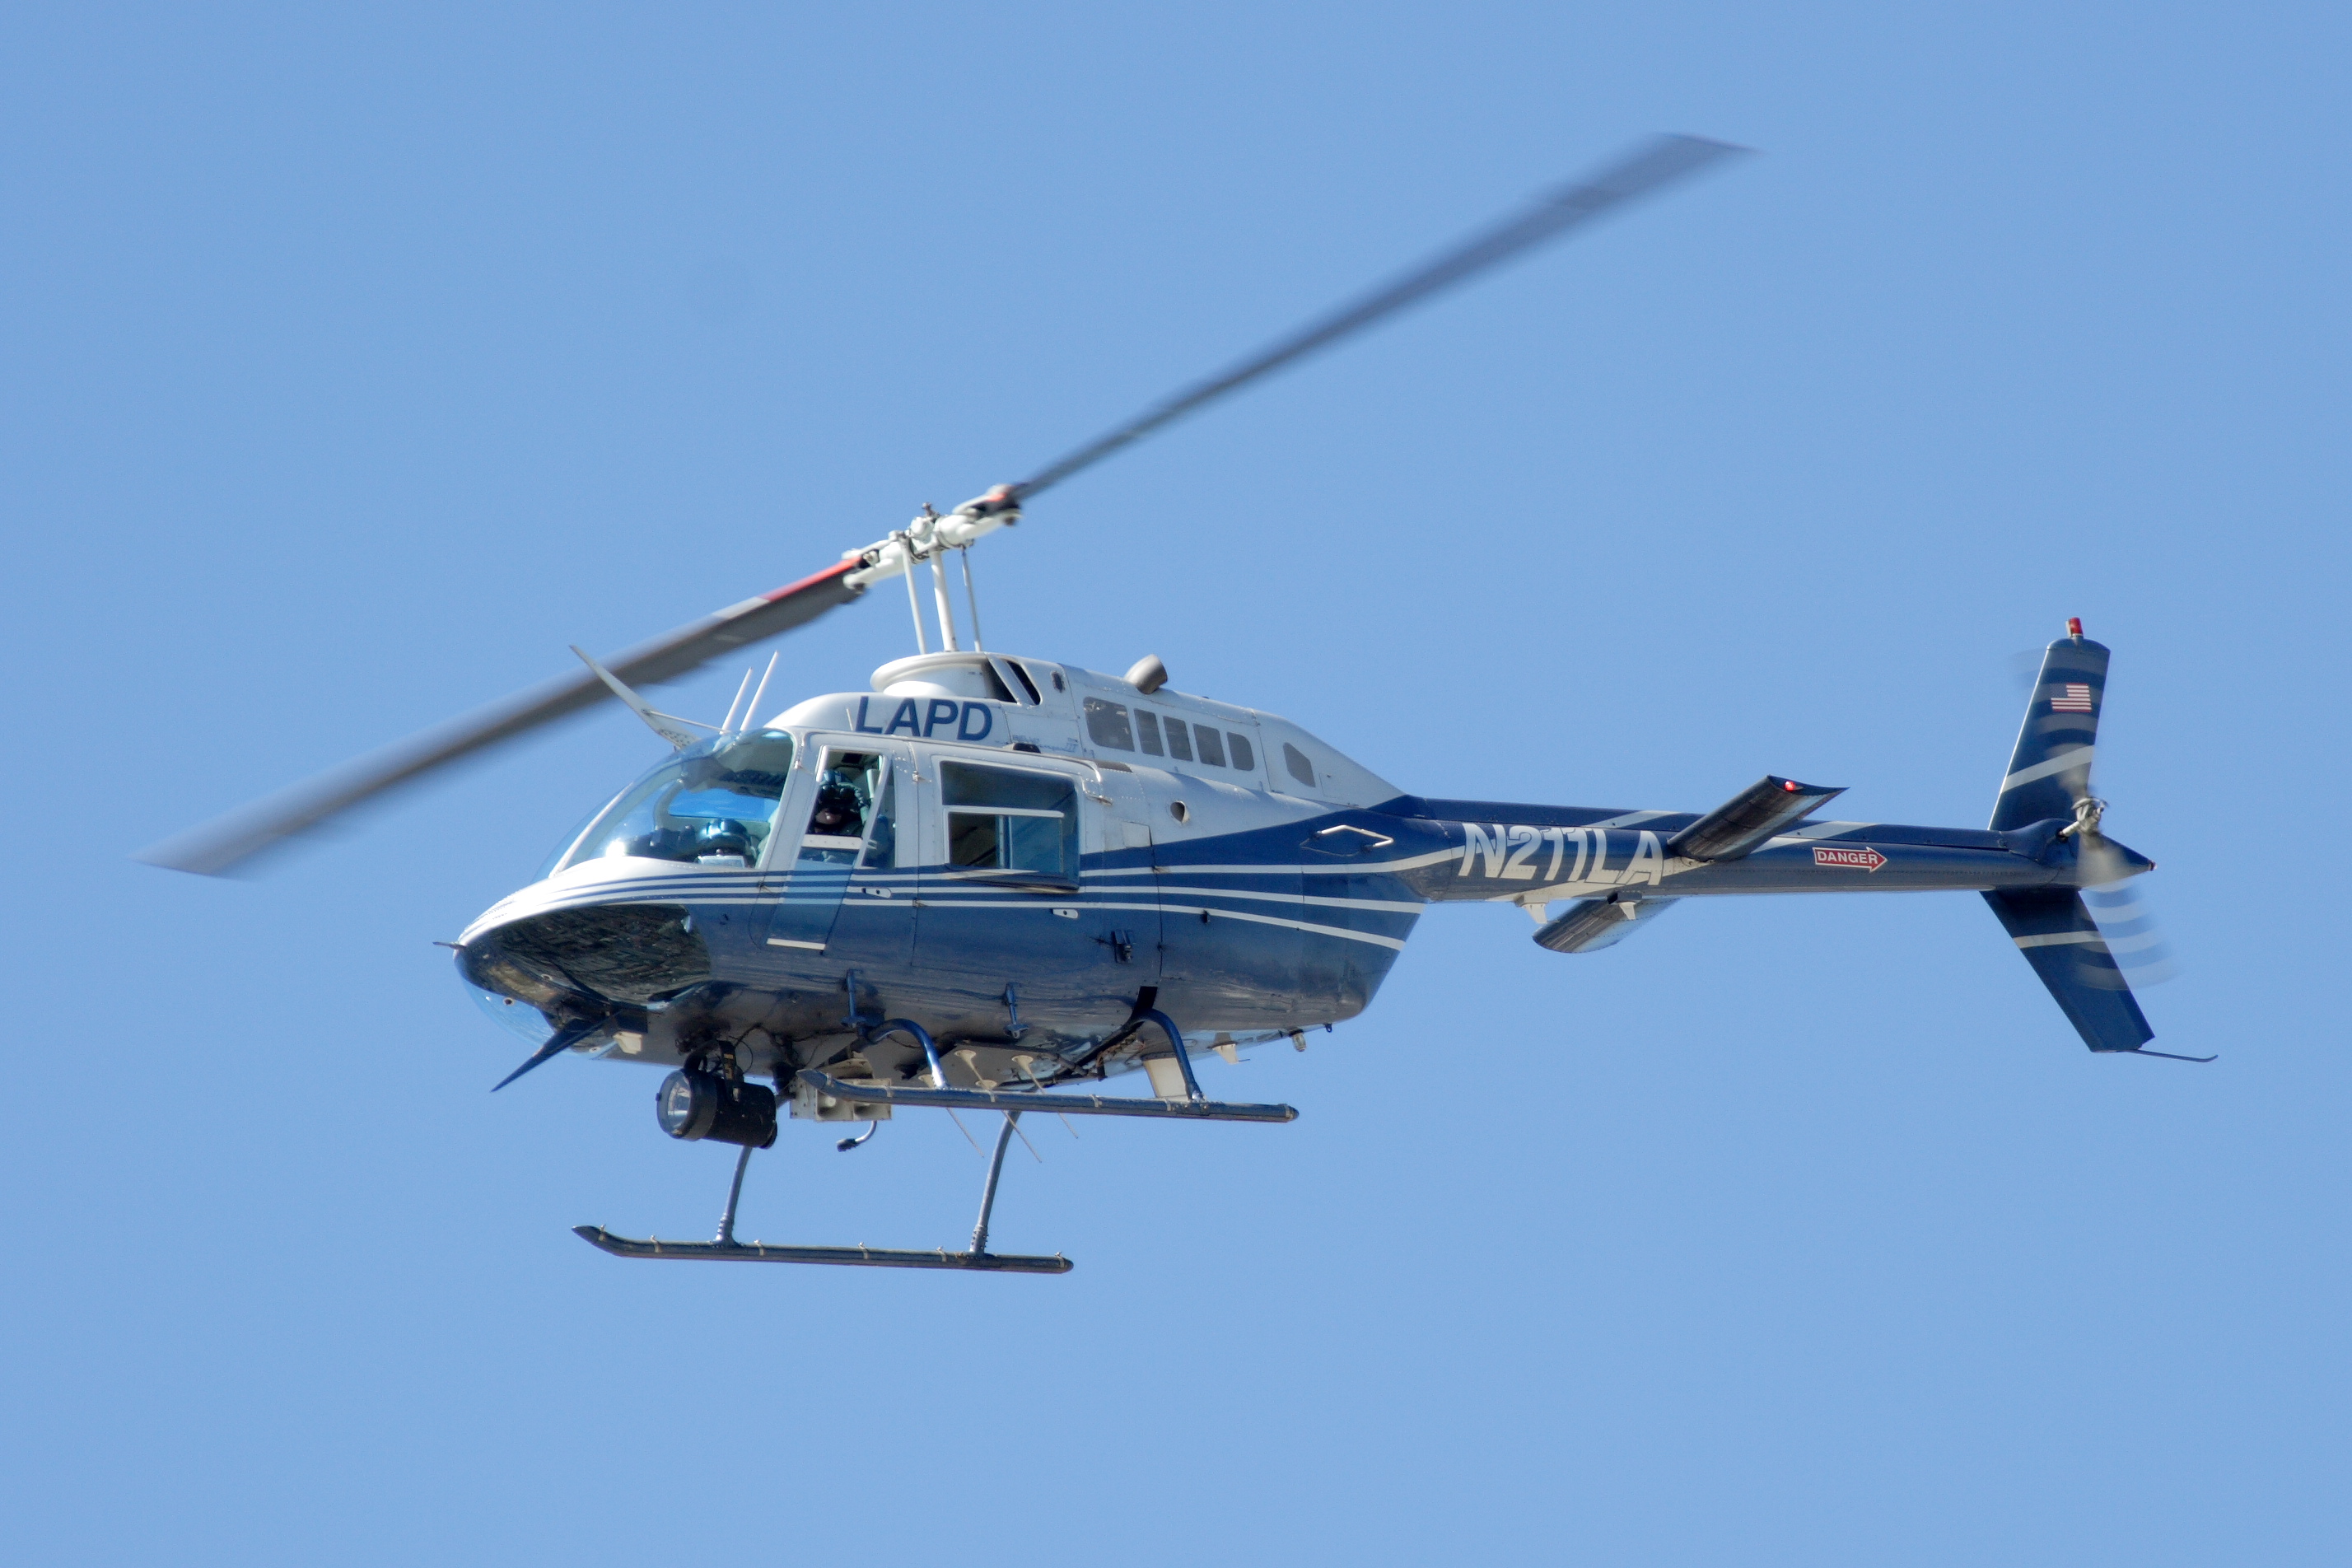 Helicopter driving simulator in Yanshan University (Bell 206)